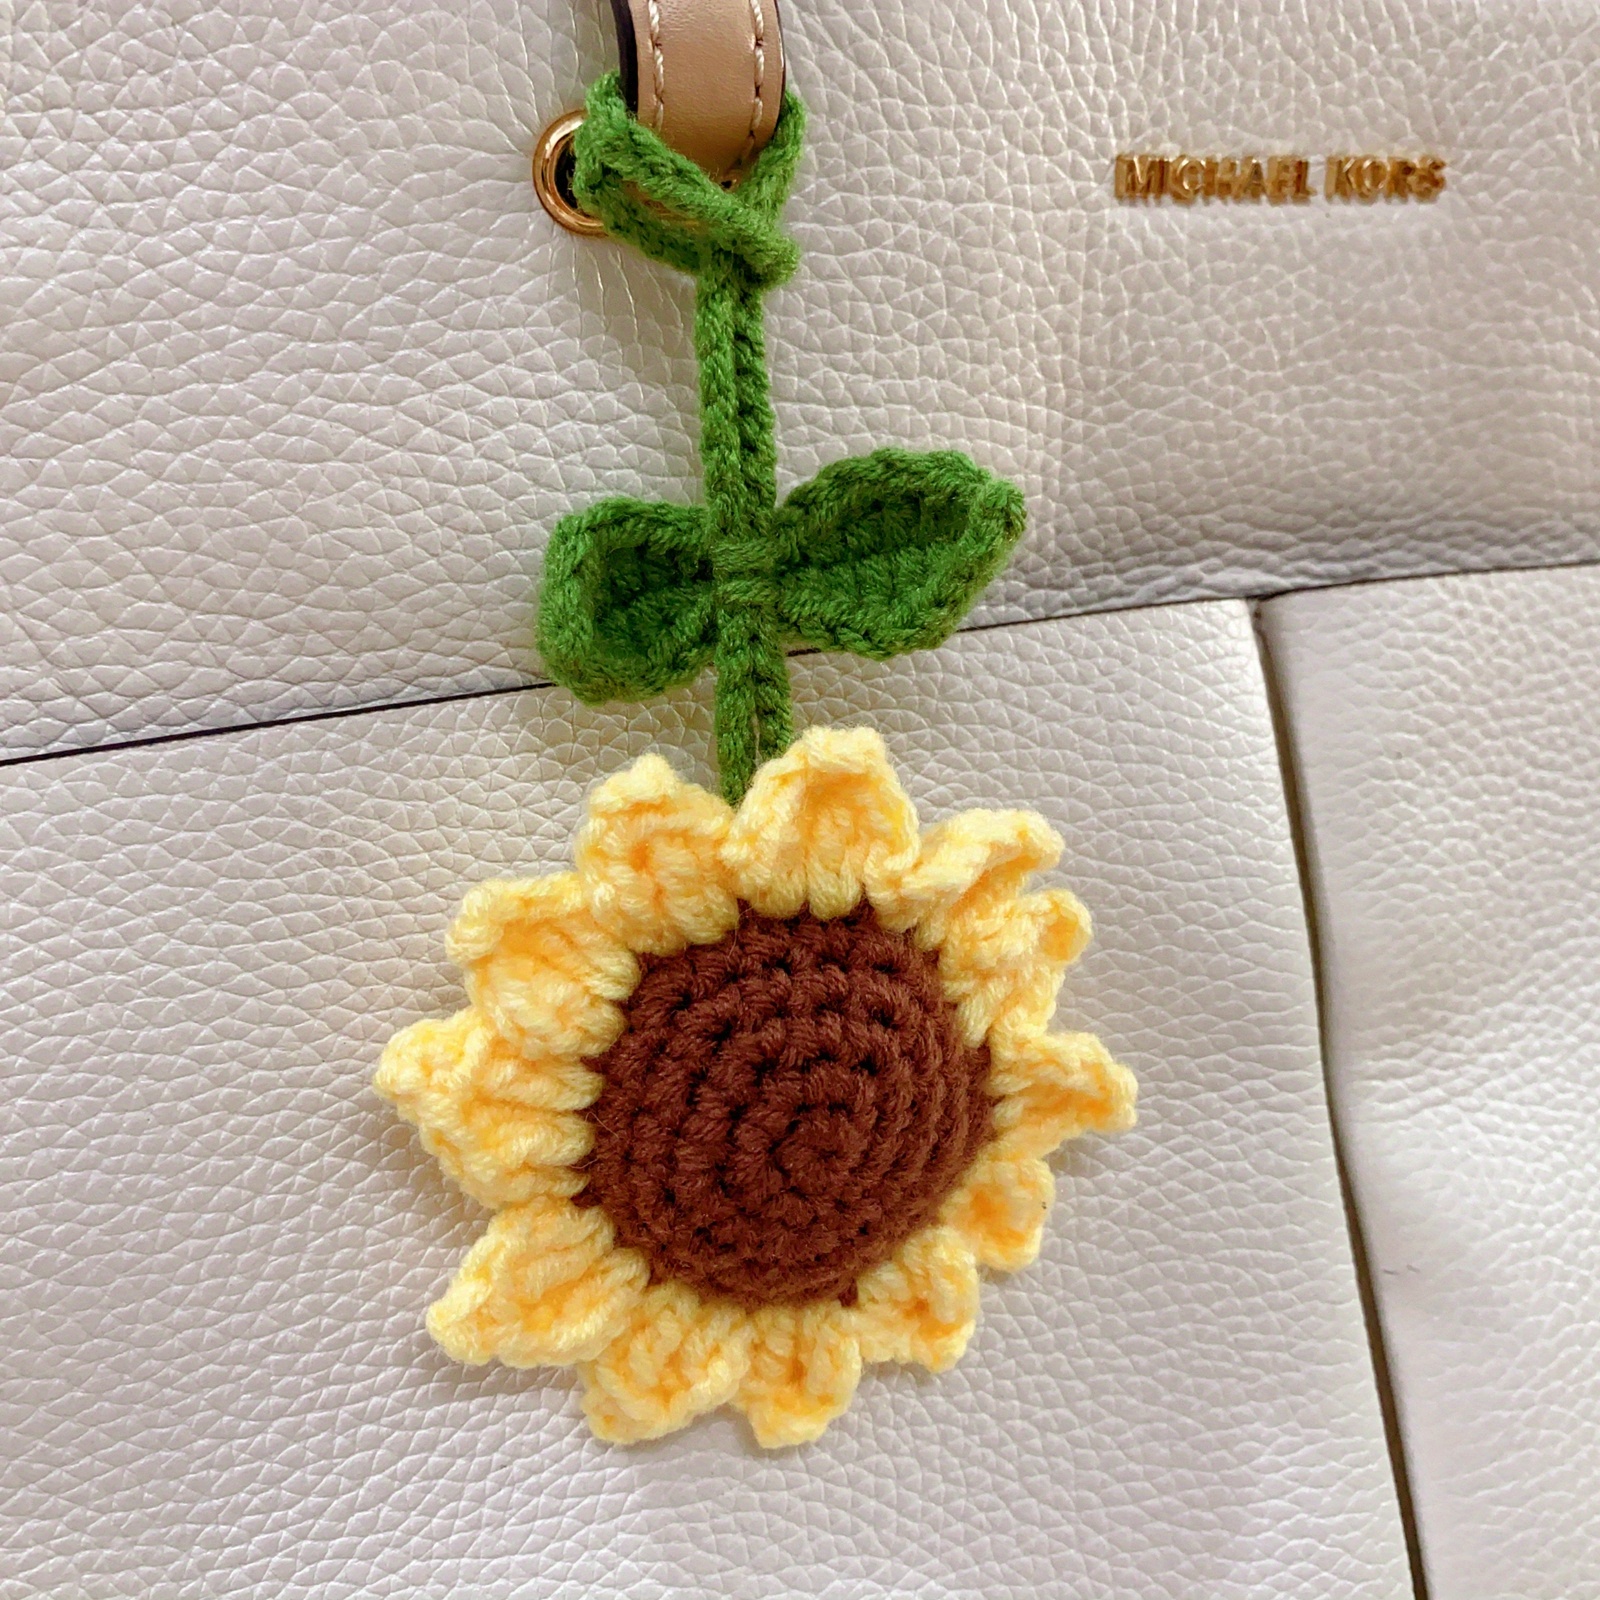 Michael Kors Flower Bag Charm Key Chain